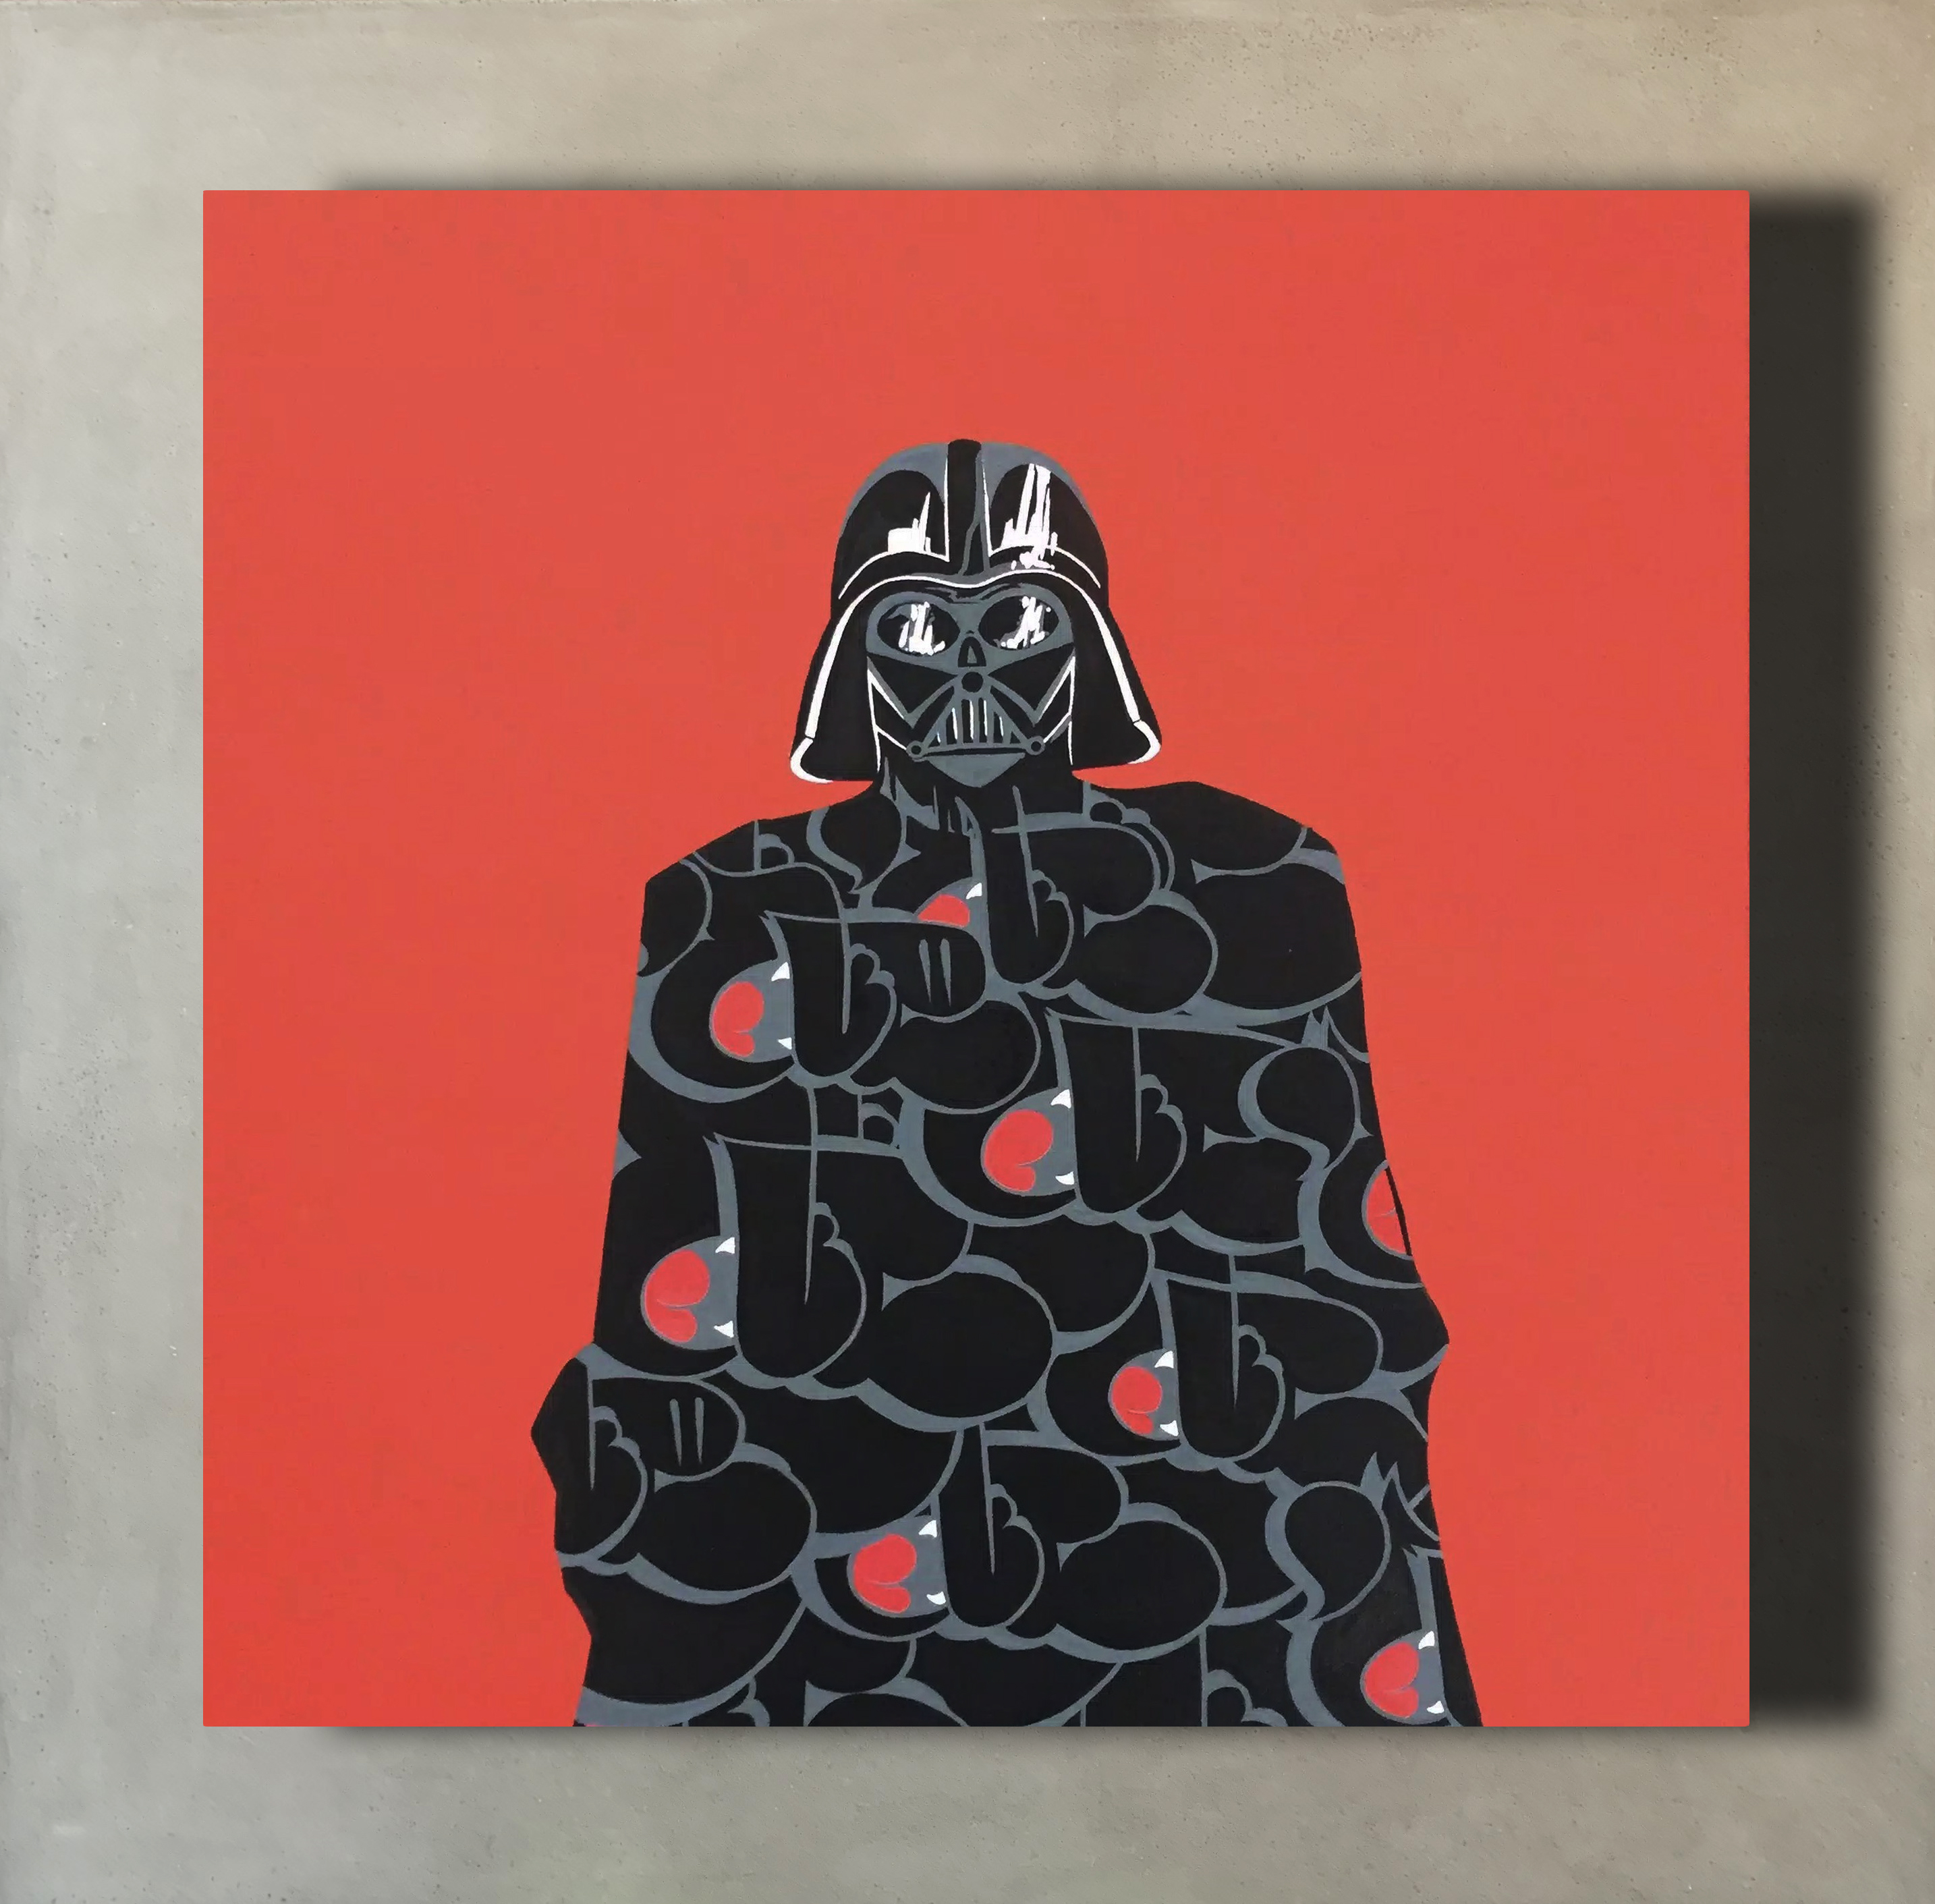 Darth Vader x Nover, 24x24" Acrylic on Canvas, 2016.